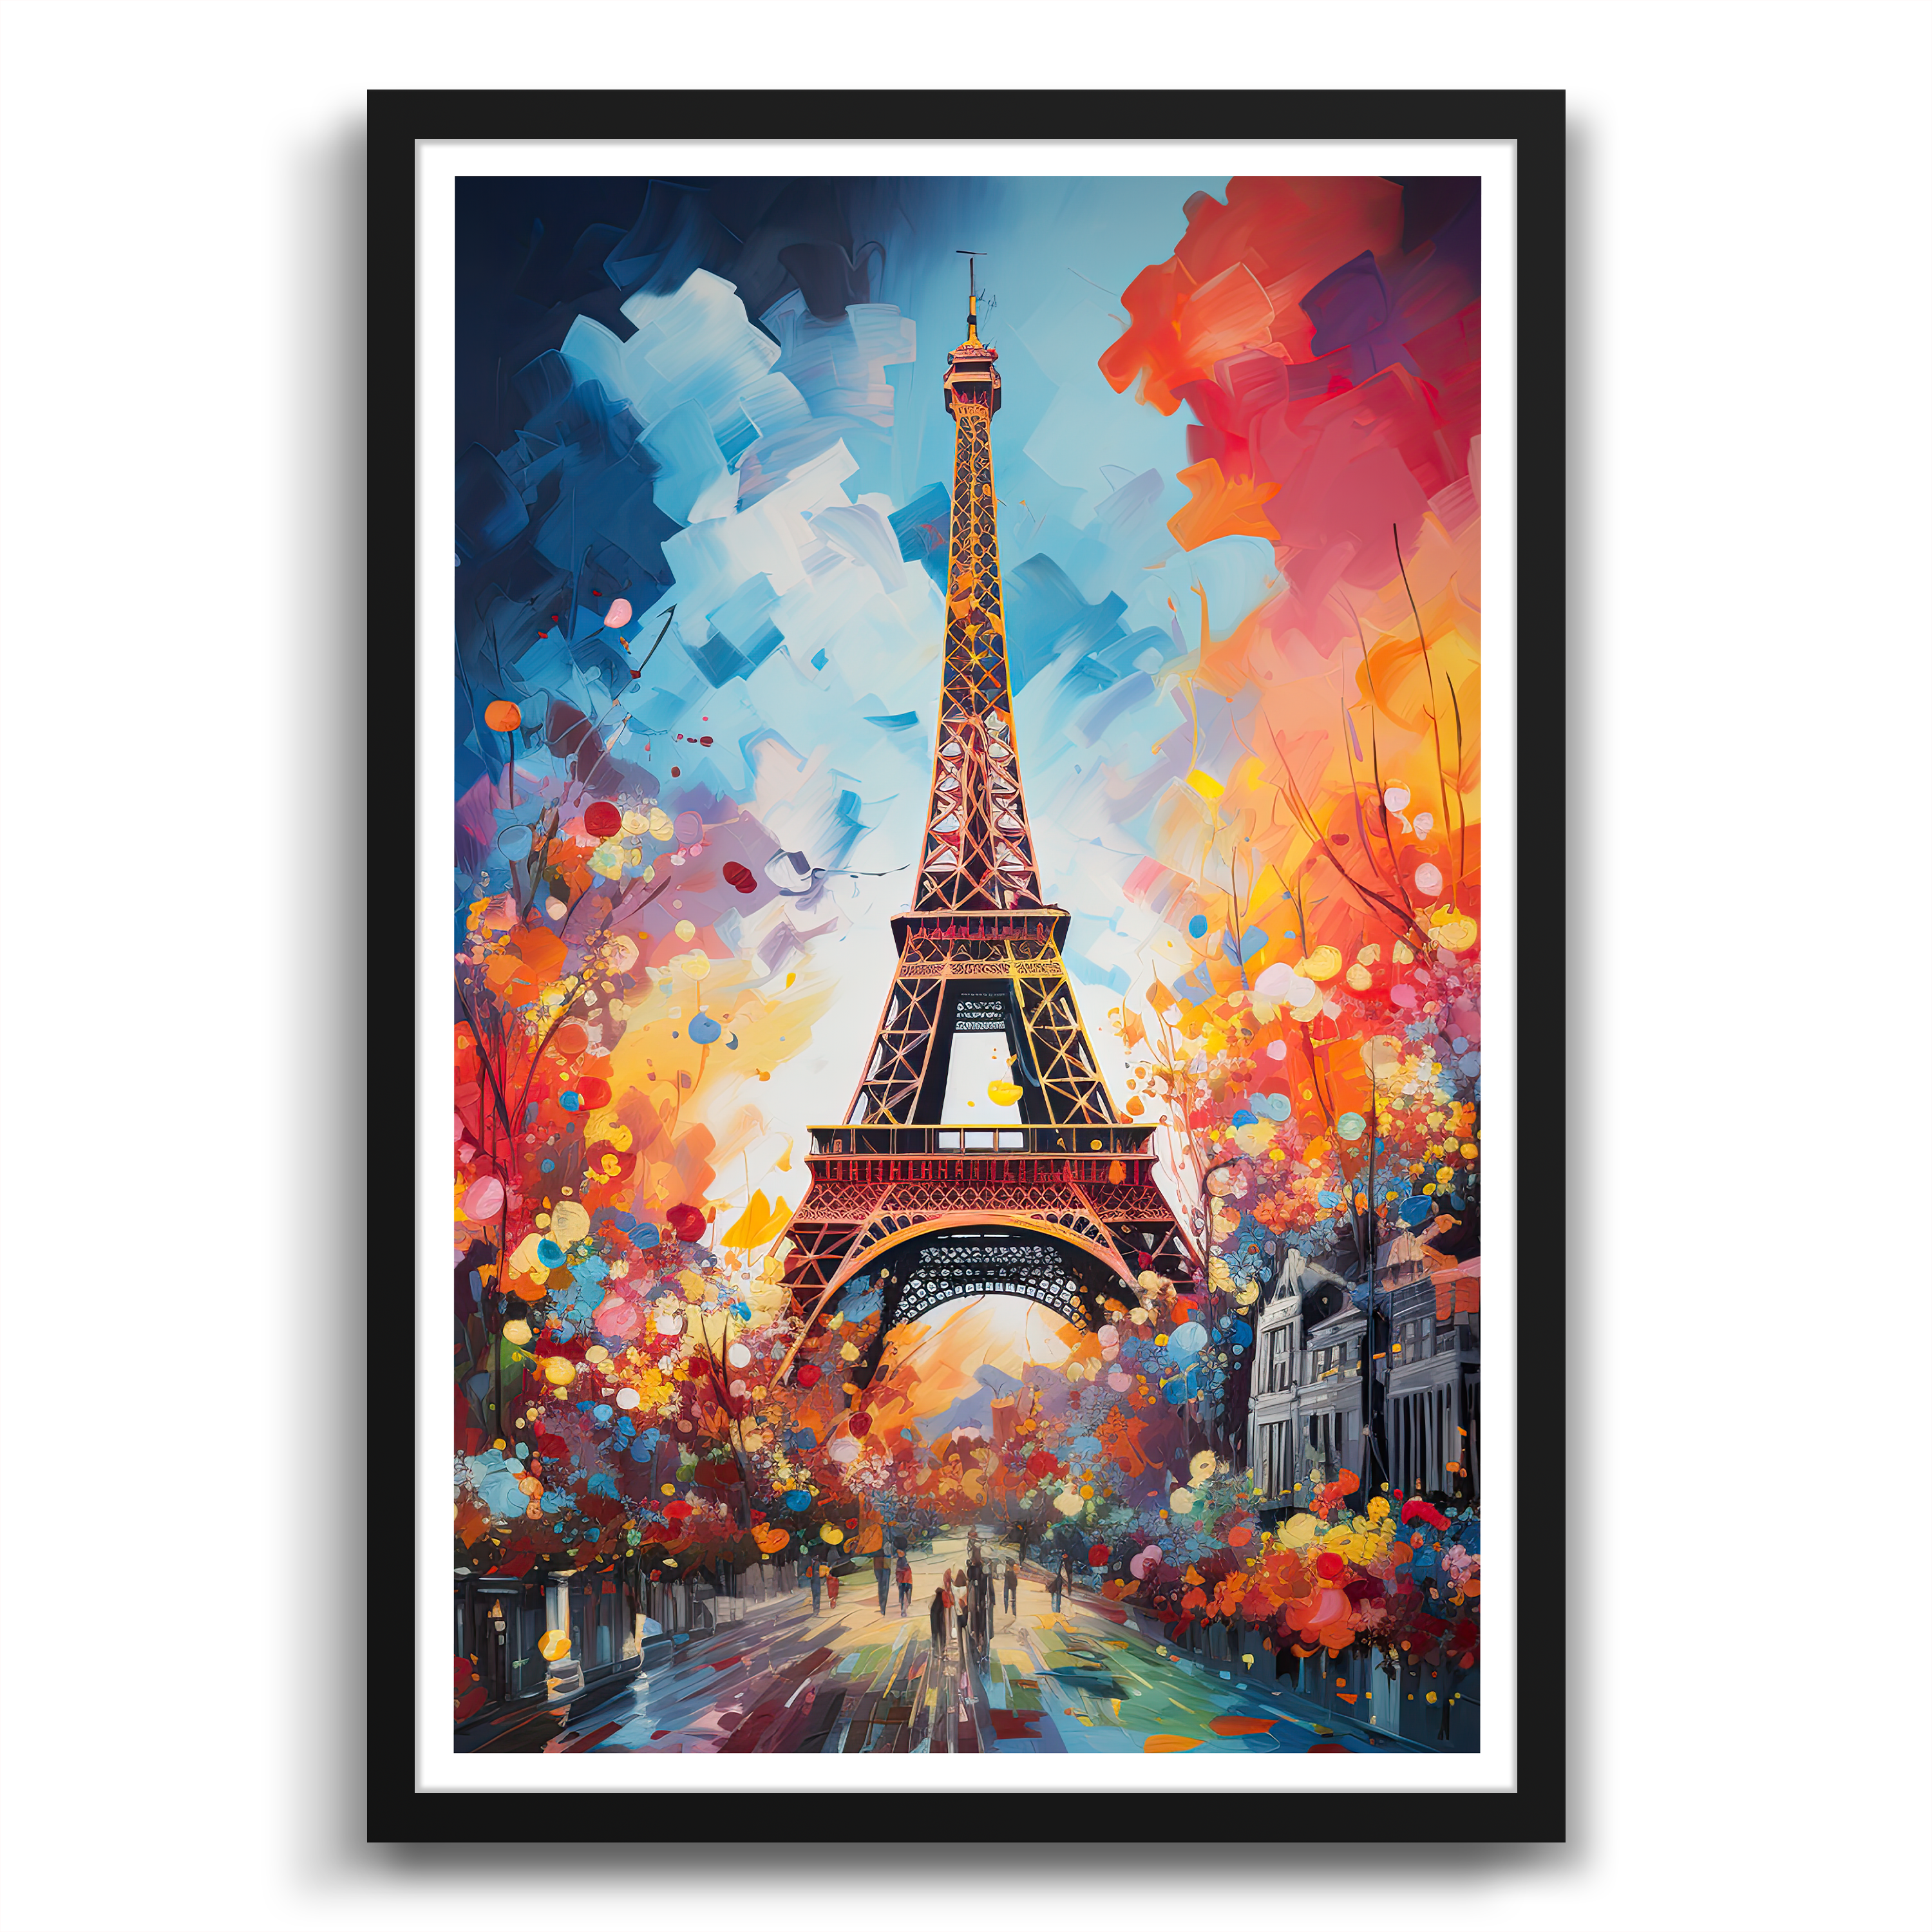 Pastel Paris by the Eiffel Tower